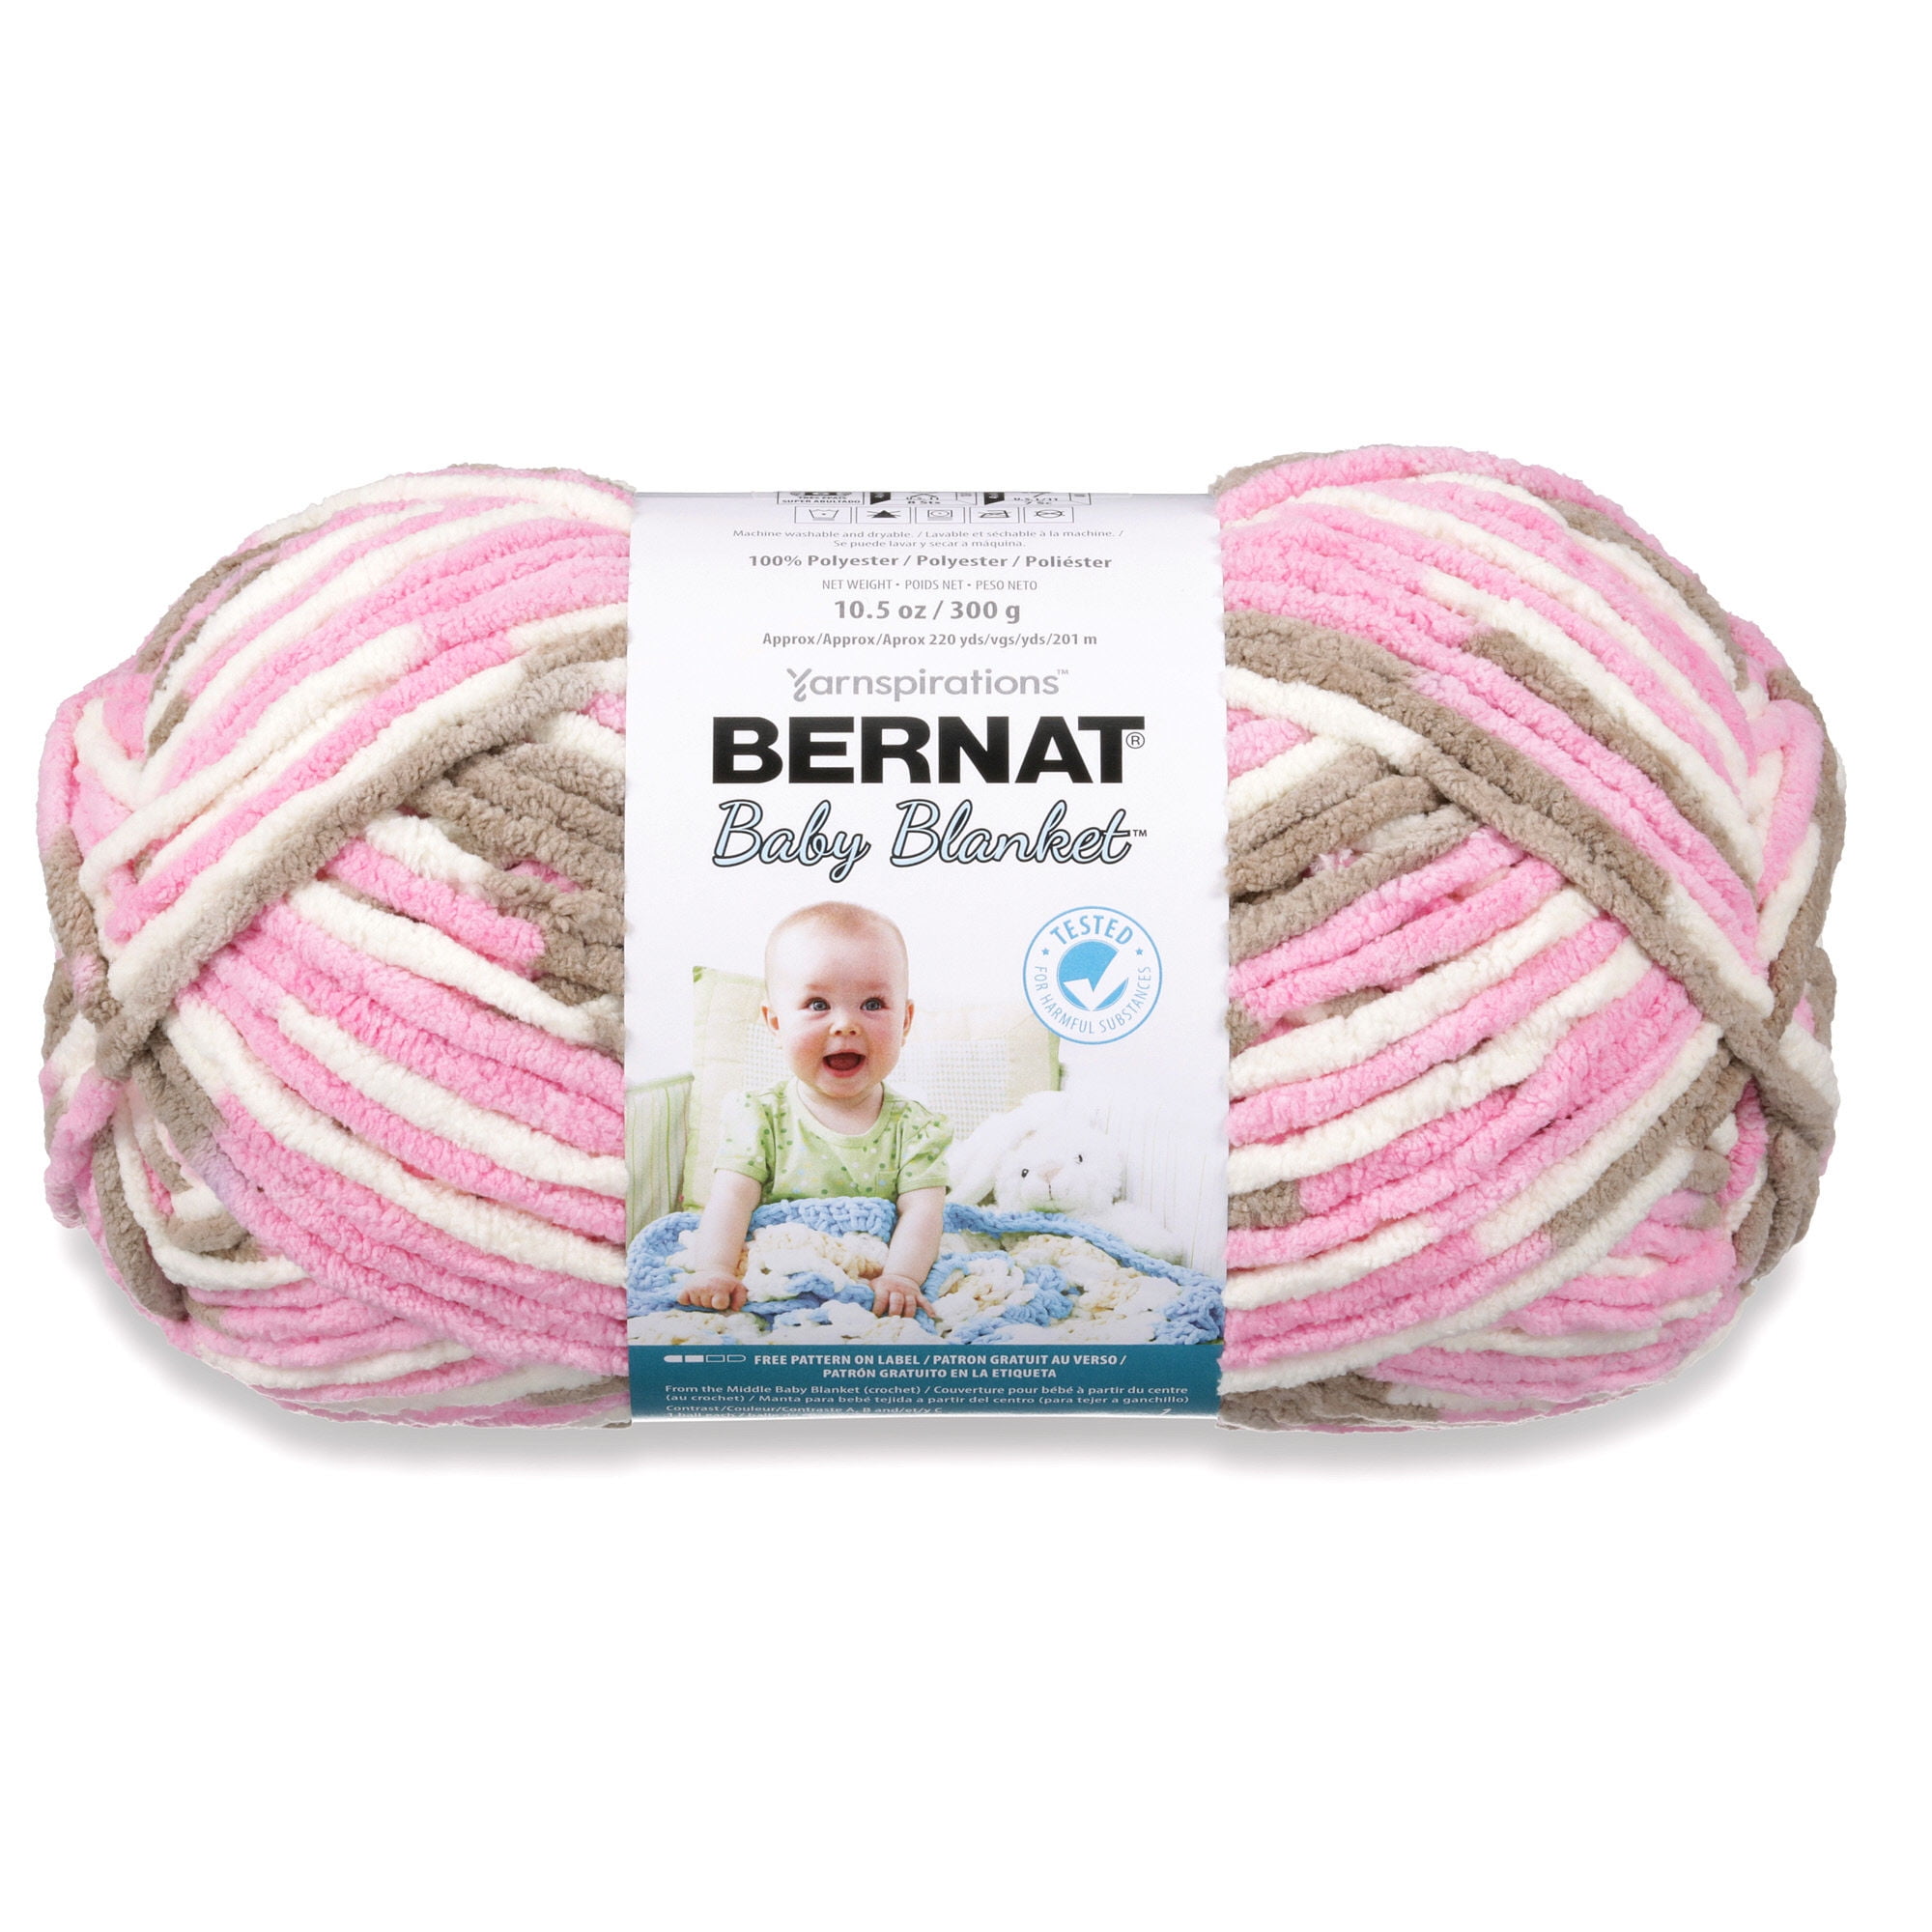 Bernat Baby Blanket Yarn Tiny Red Barn and Tea Rose 3.5 Oz F1 for sale  online